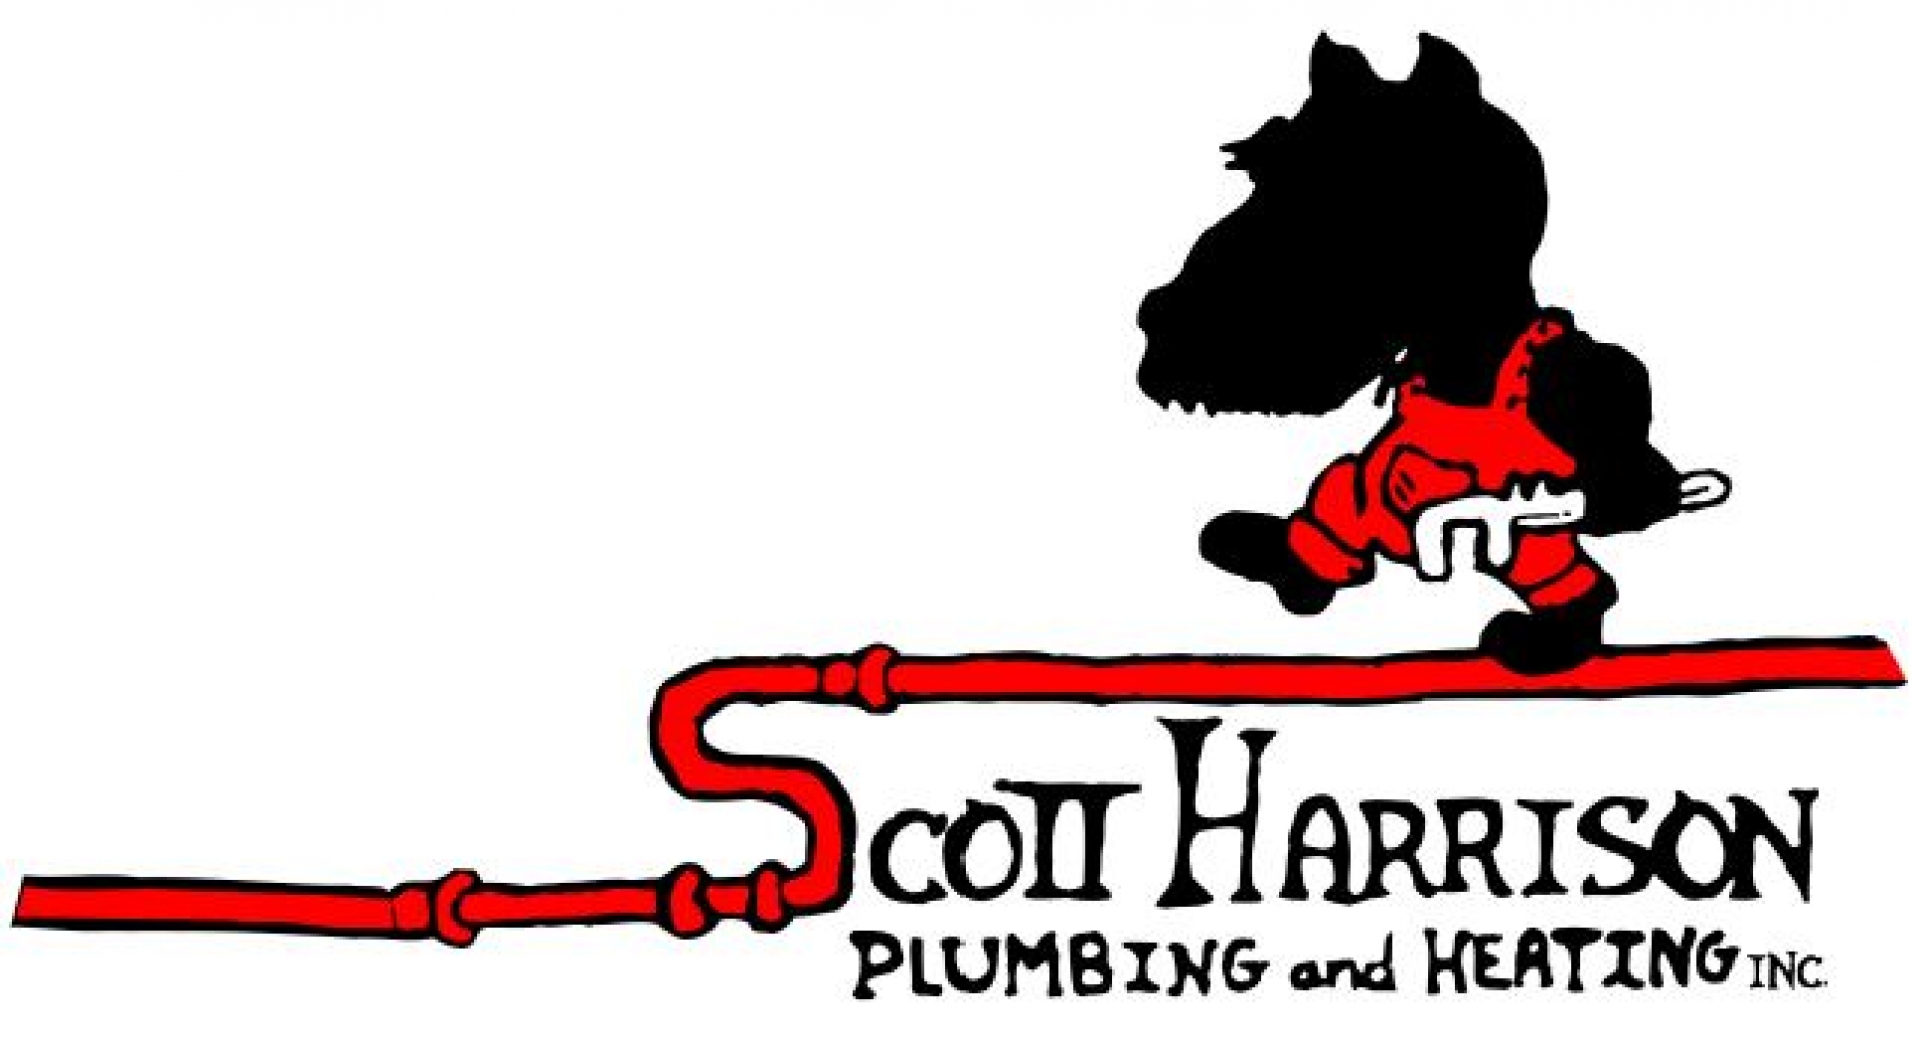 Scott Harrison Plumbing and Heating company logo